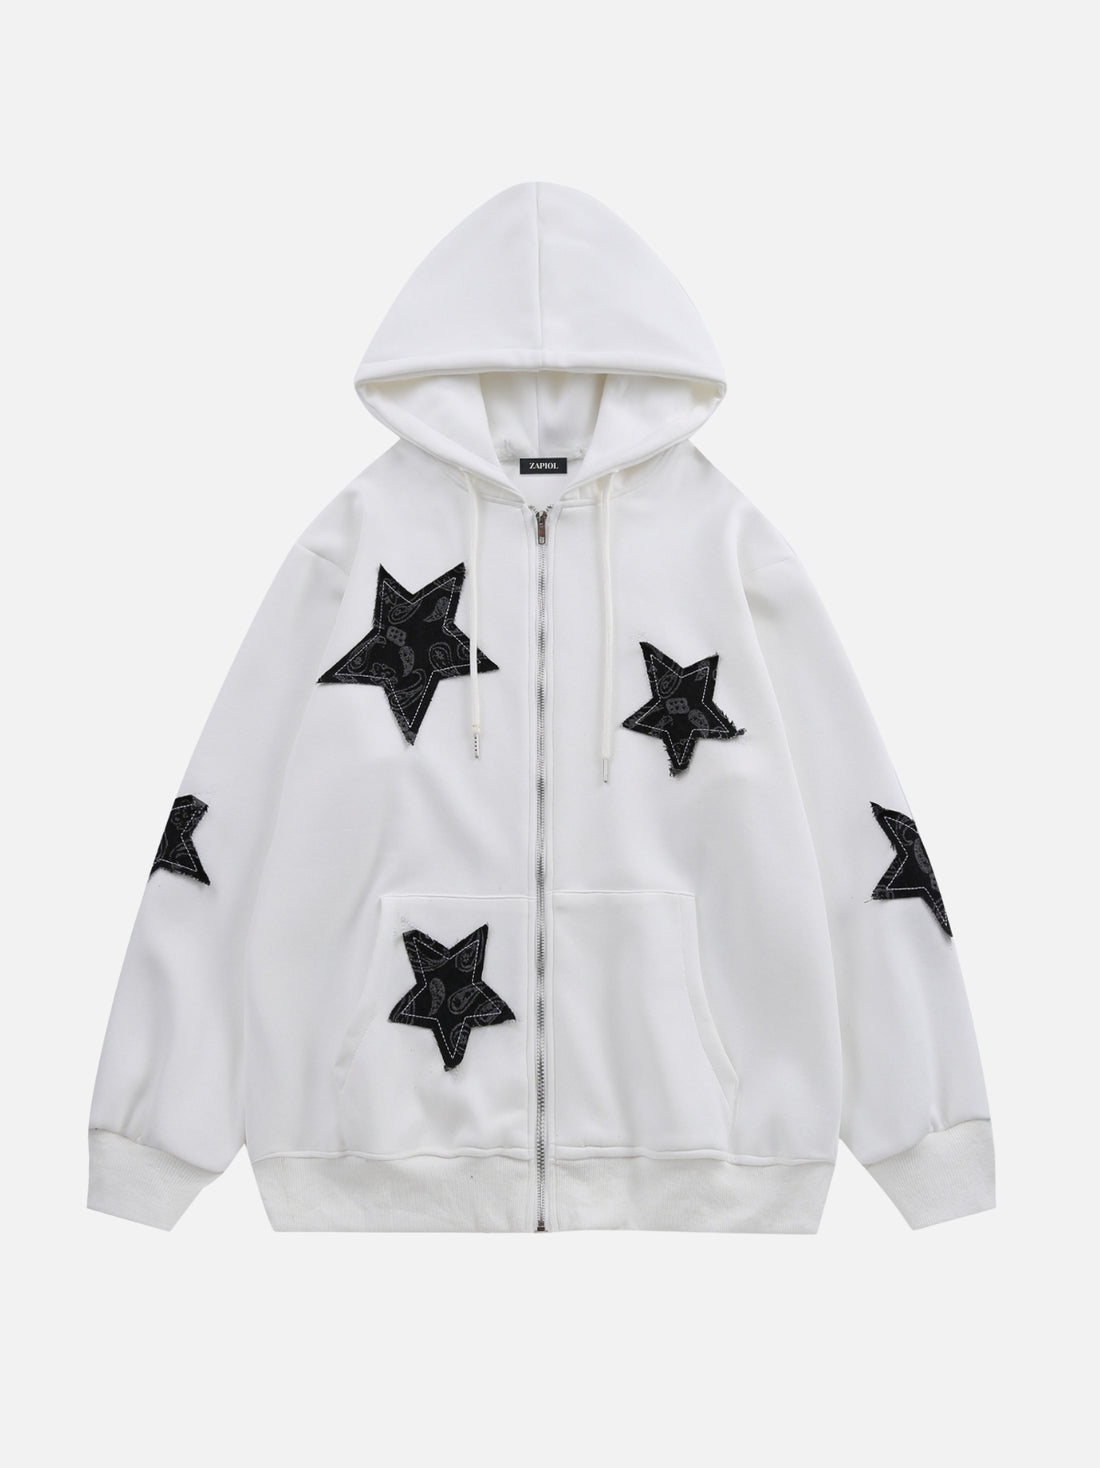 STARIUM - Graphic Sewn Zip Up Hoodie Black | Teenwear.eu